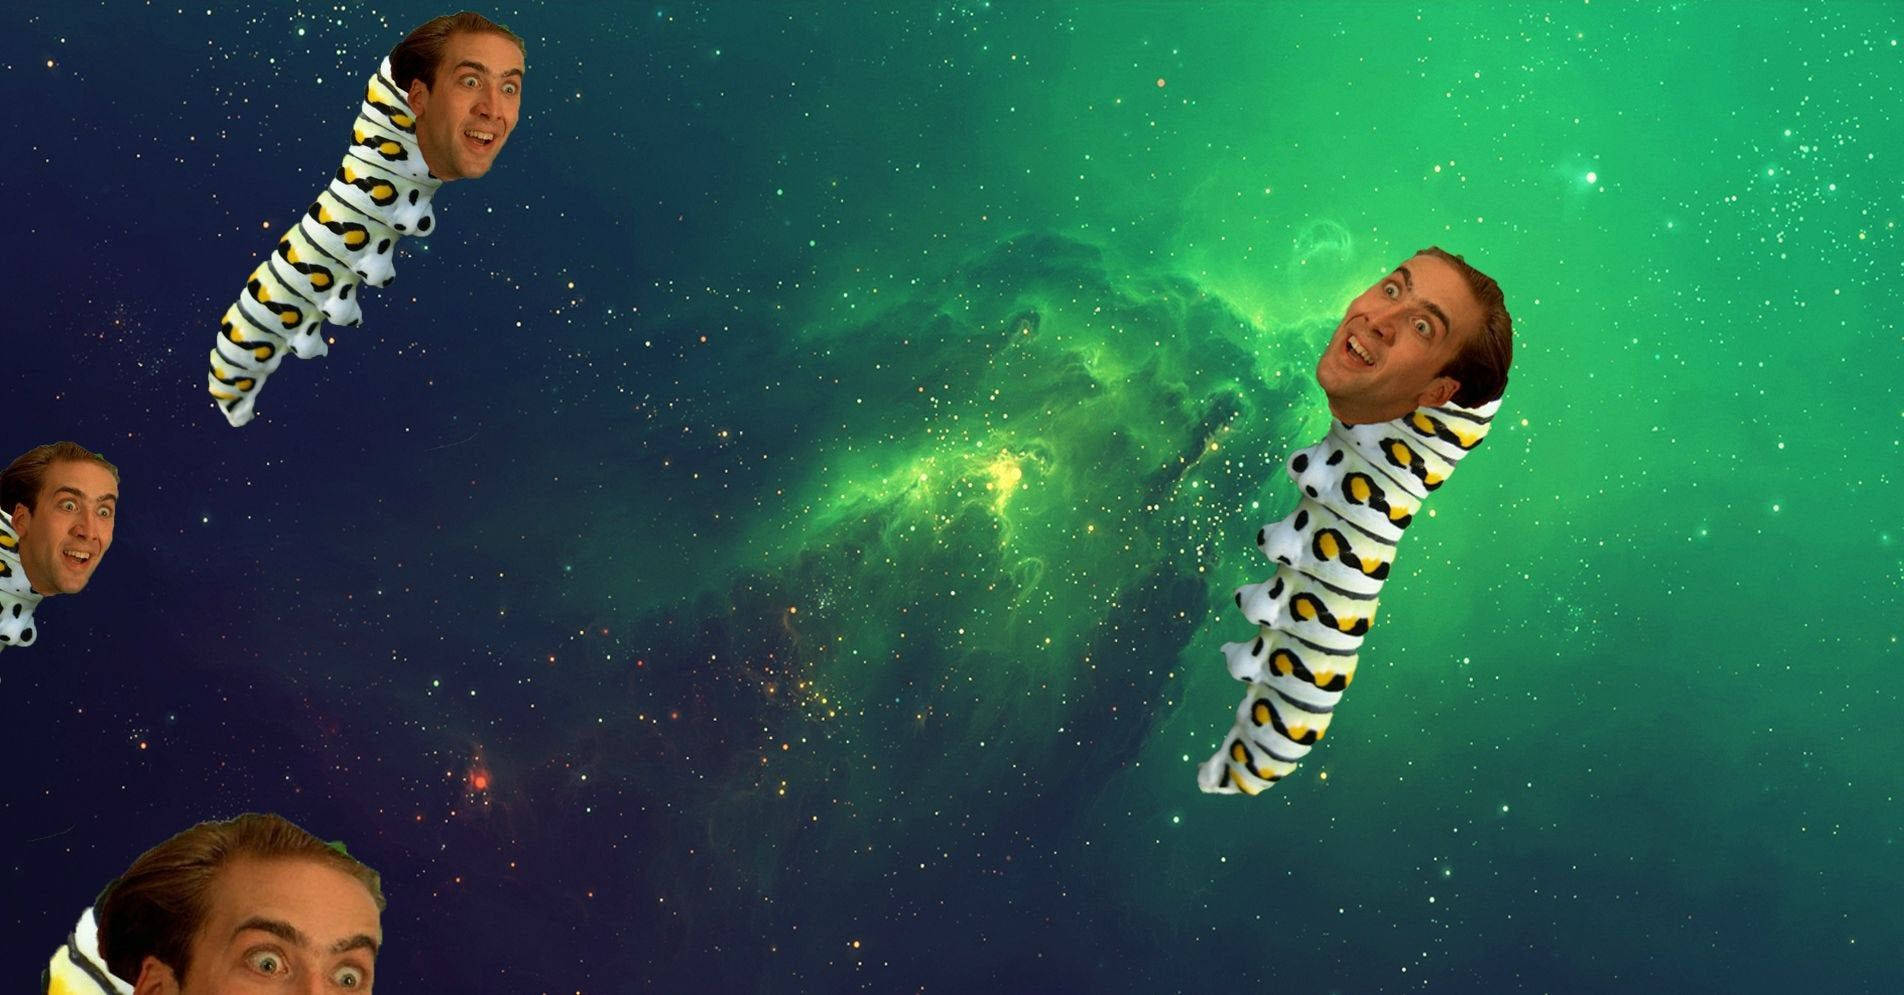 Nicolas Cage Caterpillar Meme Wallpaper